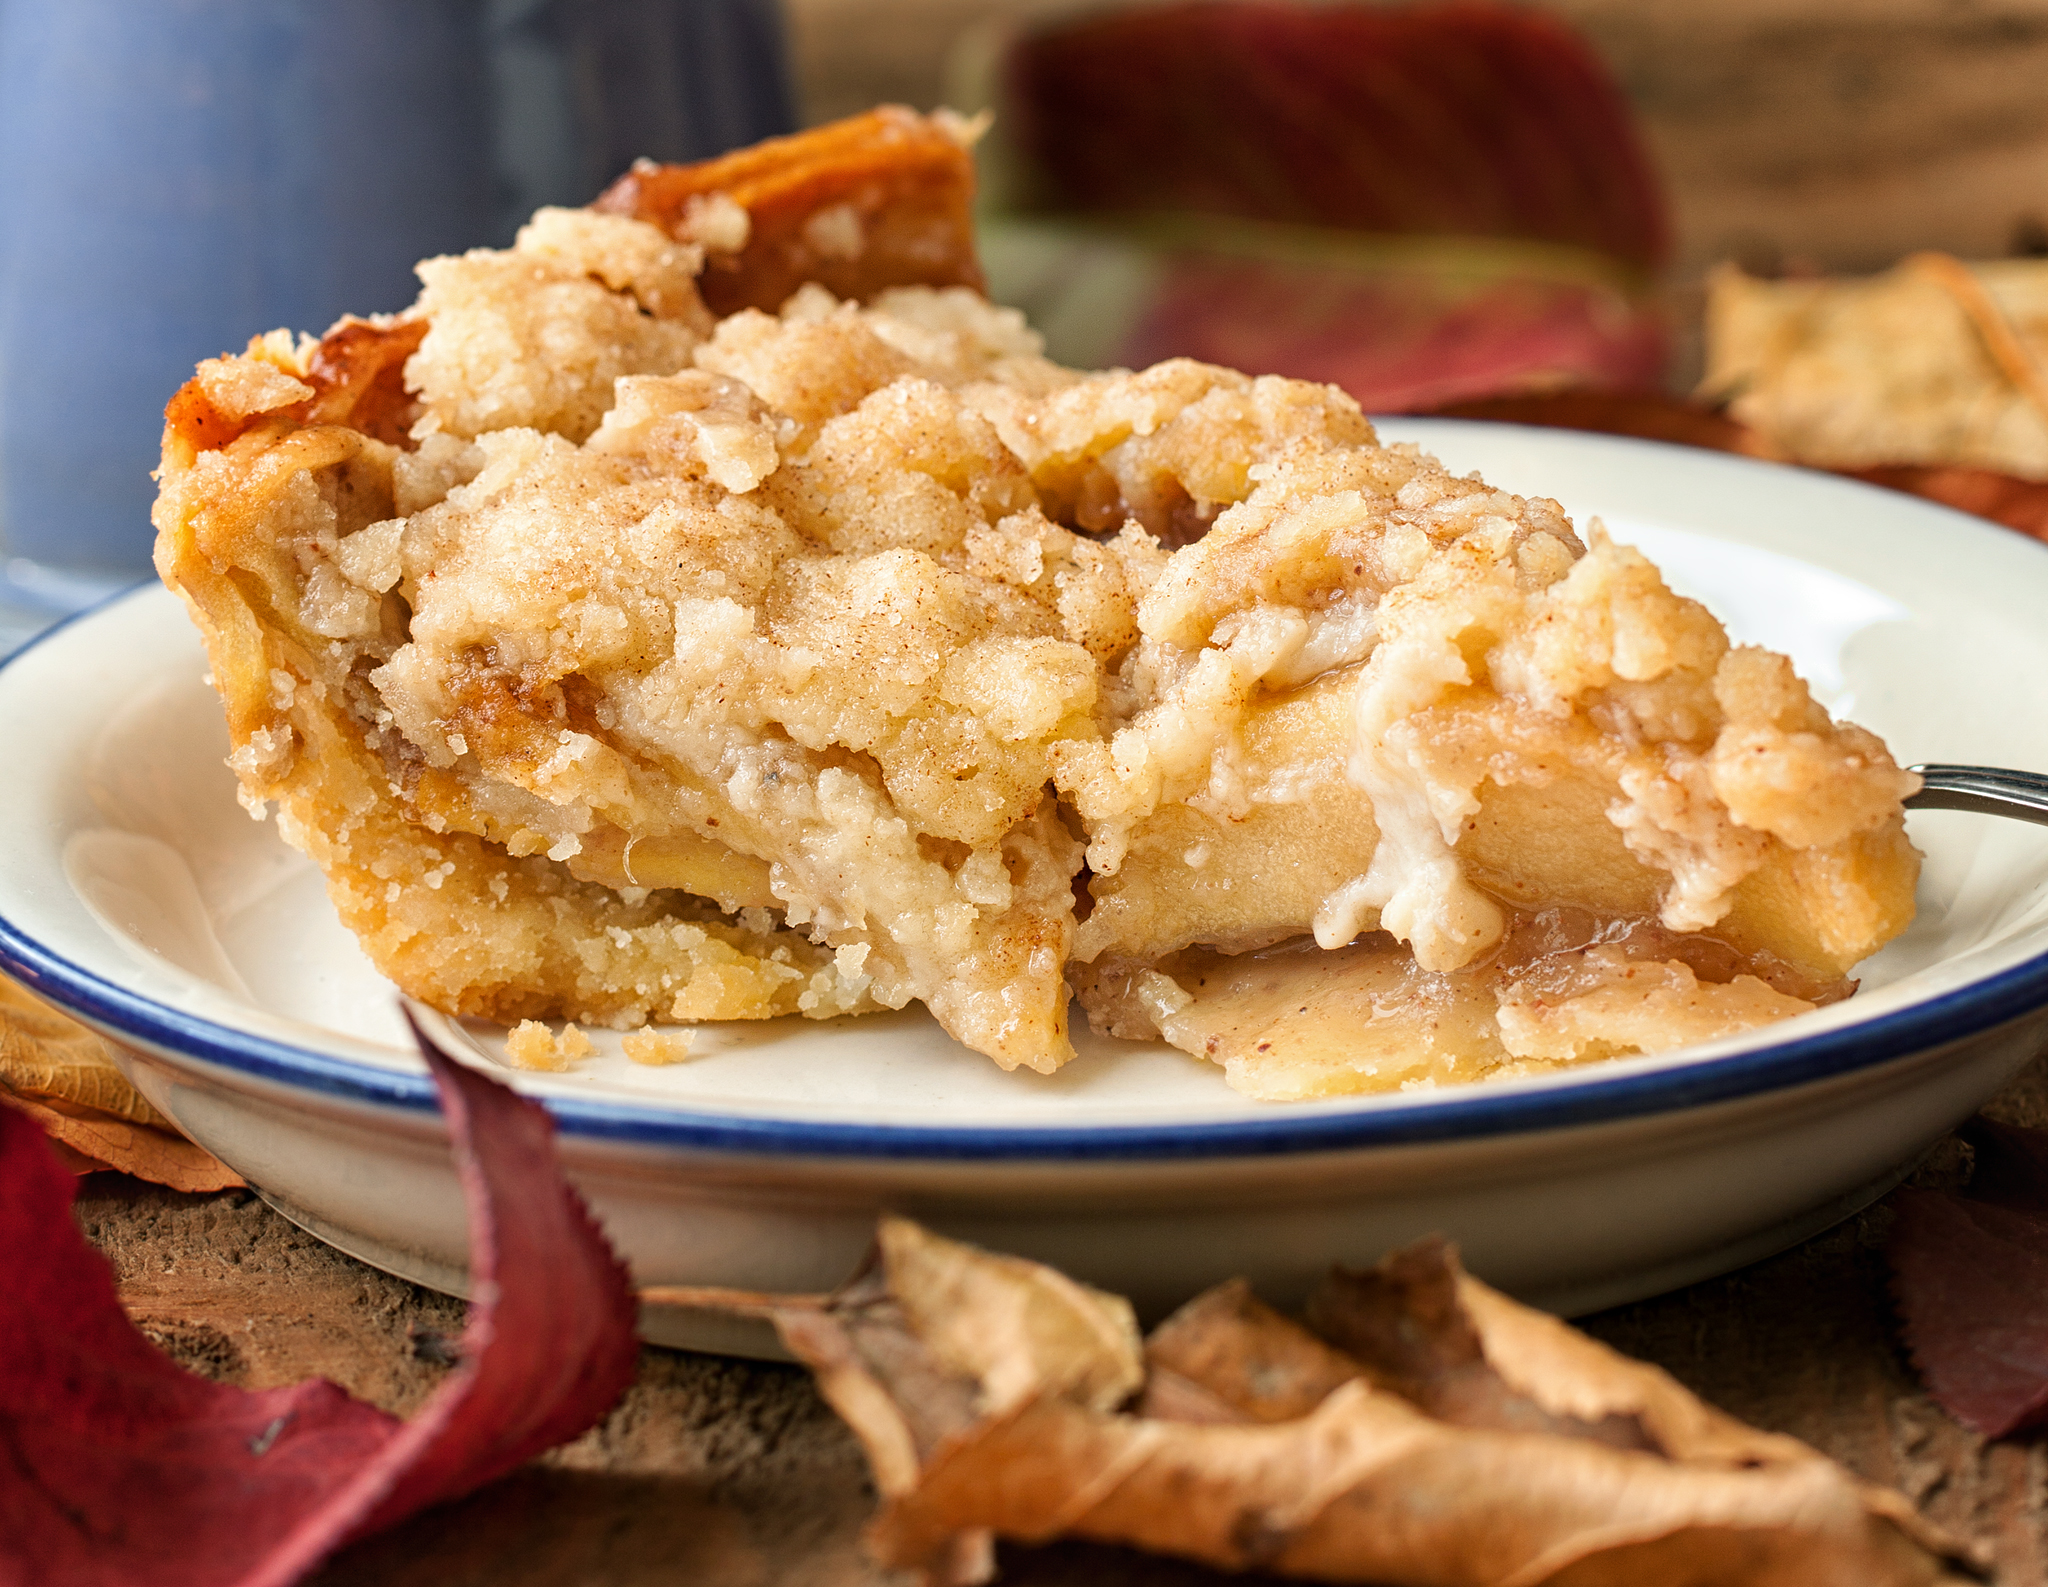 Apple Pie with no top crust